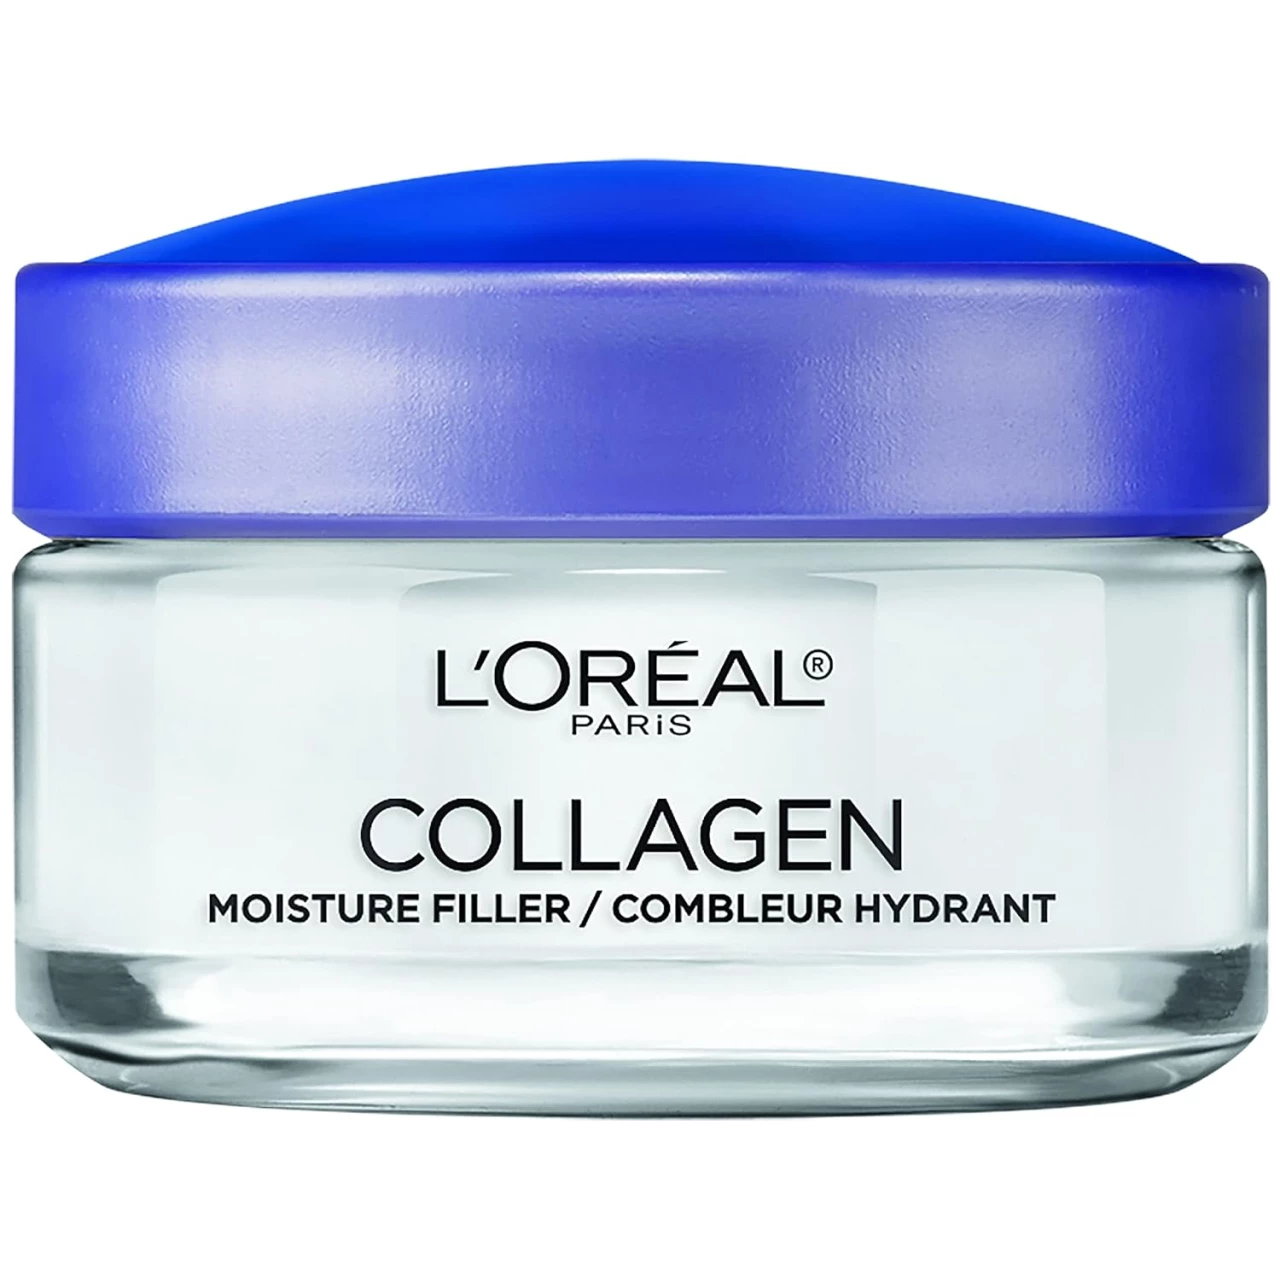 L&rsquo;Oreal Paris Collagen Daily Face Moisturizer, Reduce Wrinkles, Face Cream 1.7 oz